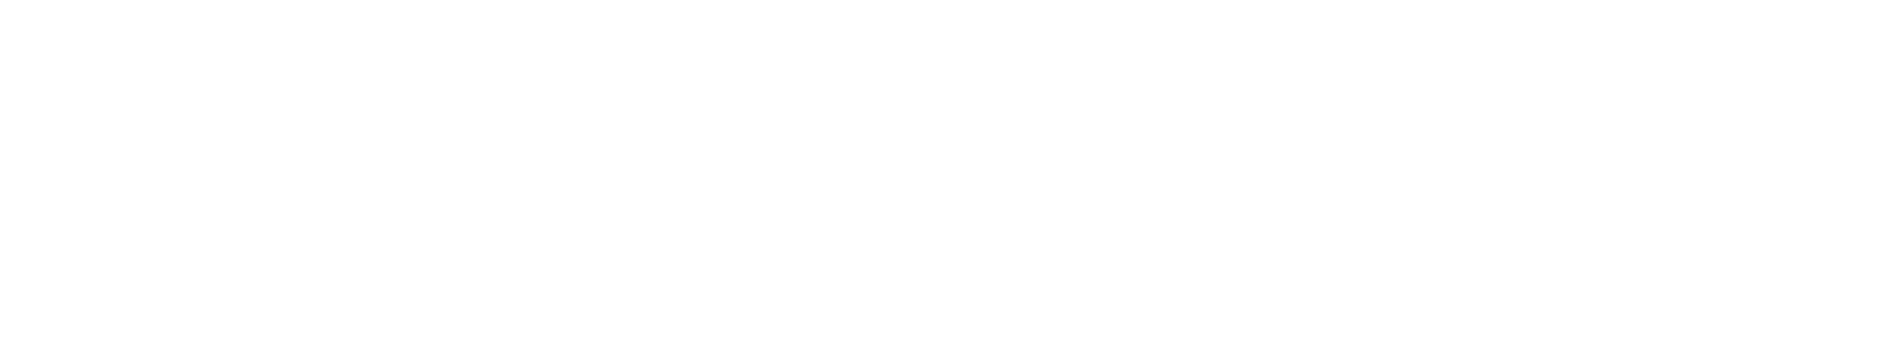 Oferta Cash Puerto Rico logo